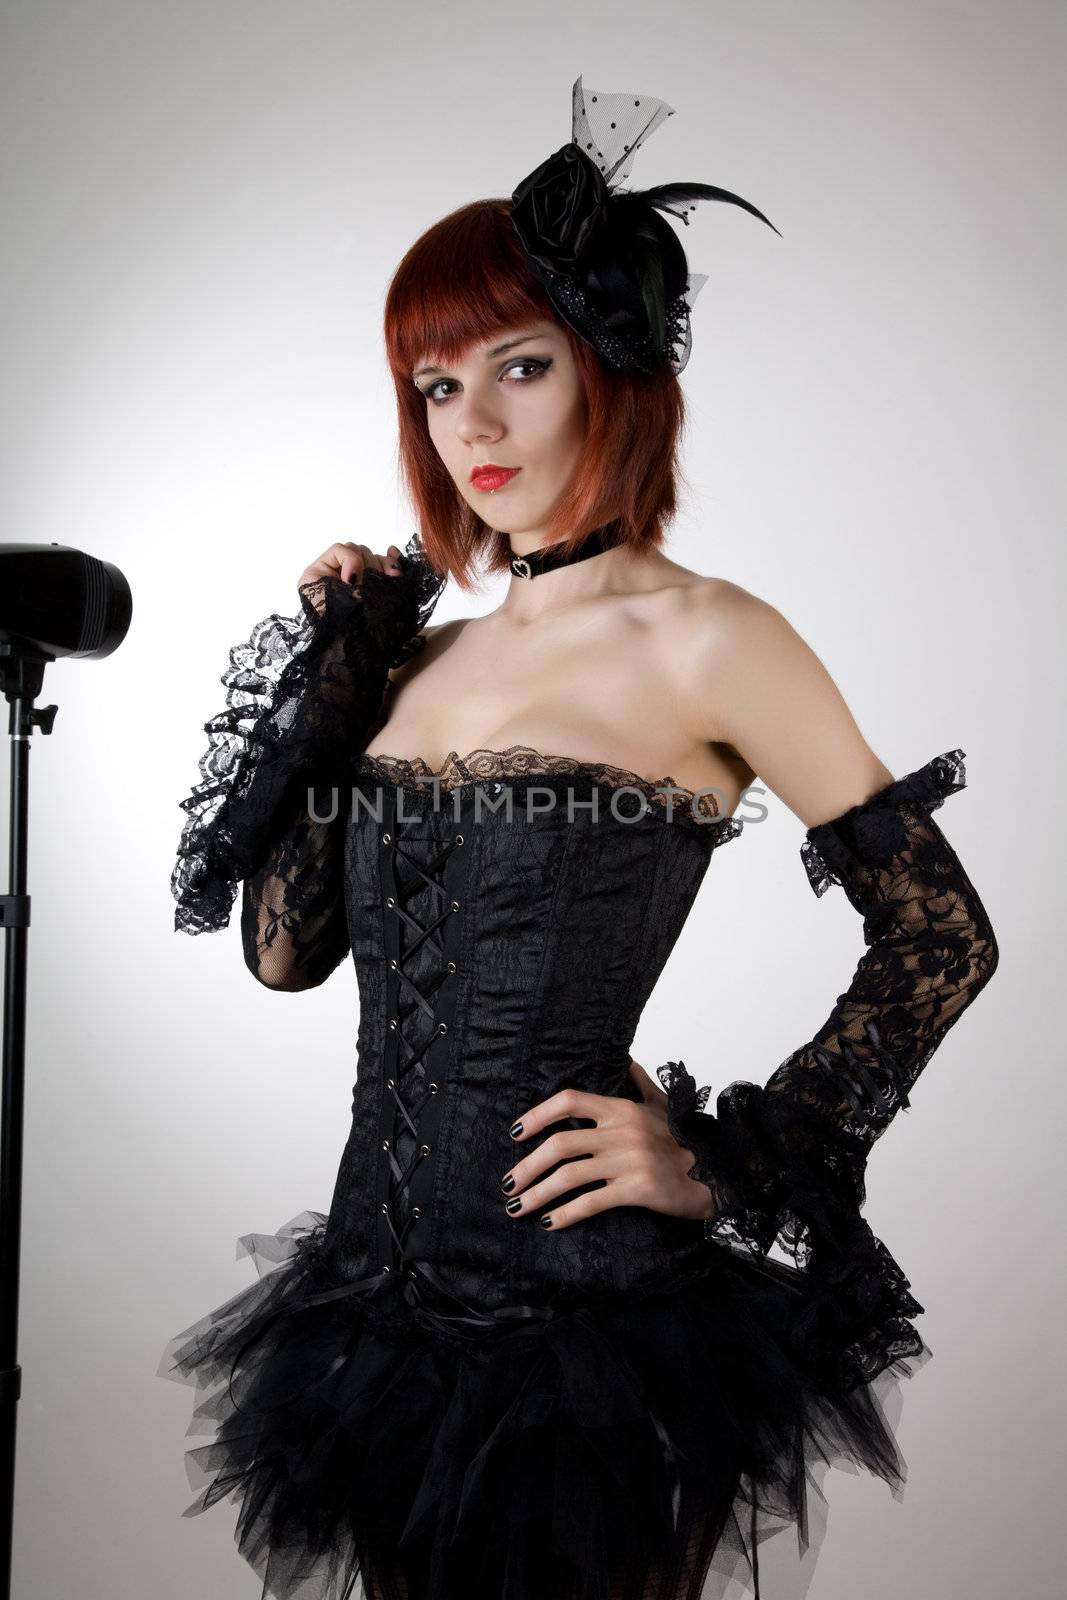 Attractive woman in black corset, gloves and tutu skirt, studio shot 